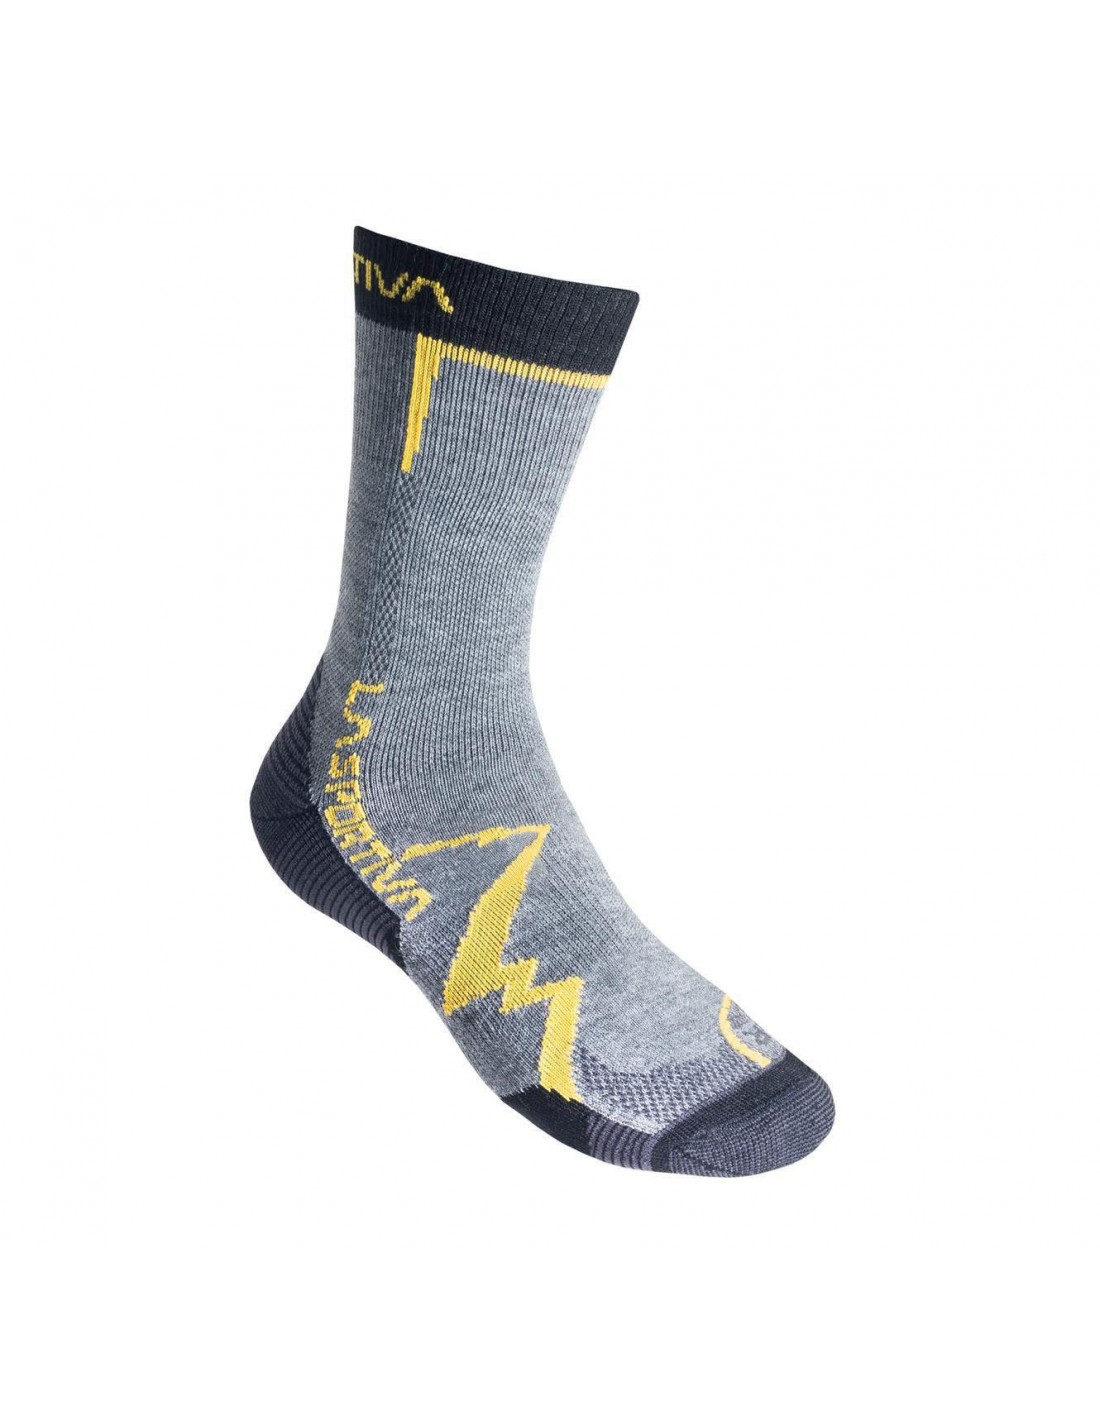 La Sportiva Socken Mountain Grey/Yellow Sockengröße - L, günstig online kaufen